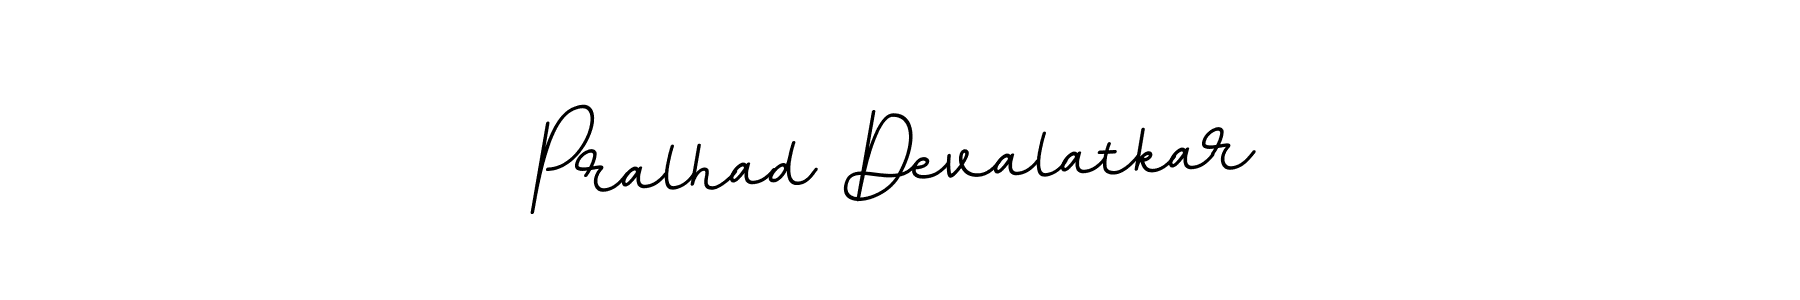 How to Draw Pralhad Devalatkar signature style? BallpointsItalic-DORy9 is a latest design signature styles for name Pralhad Devalatkar. Pralhad Devalatkar signature style 11 images and pictures png